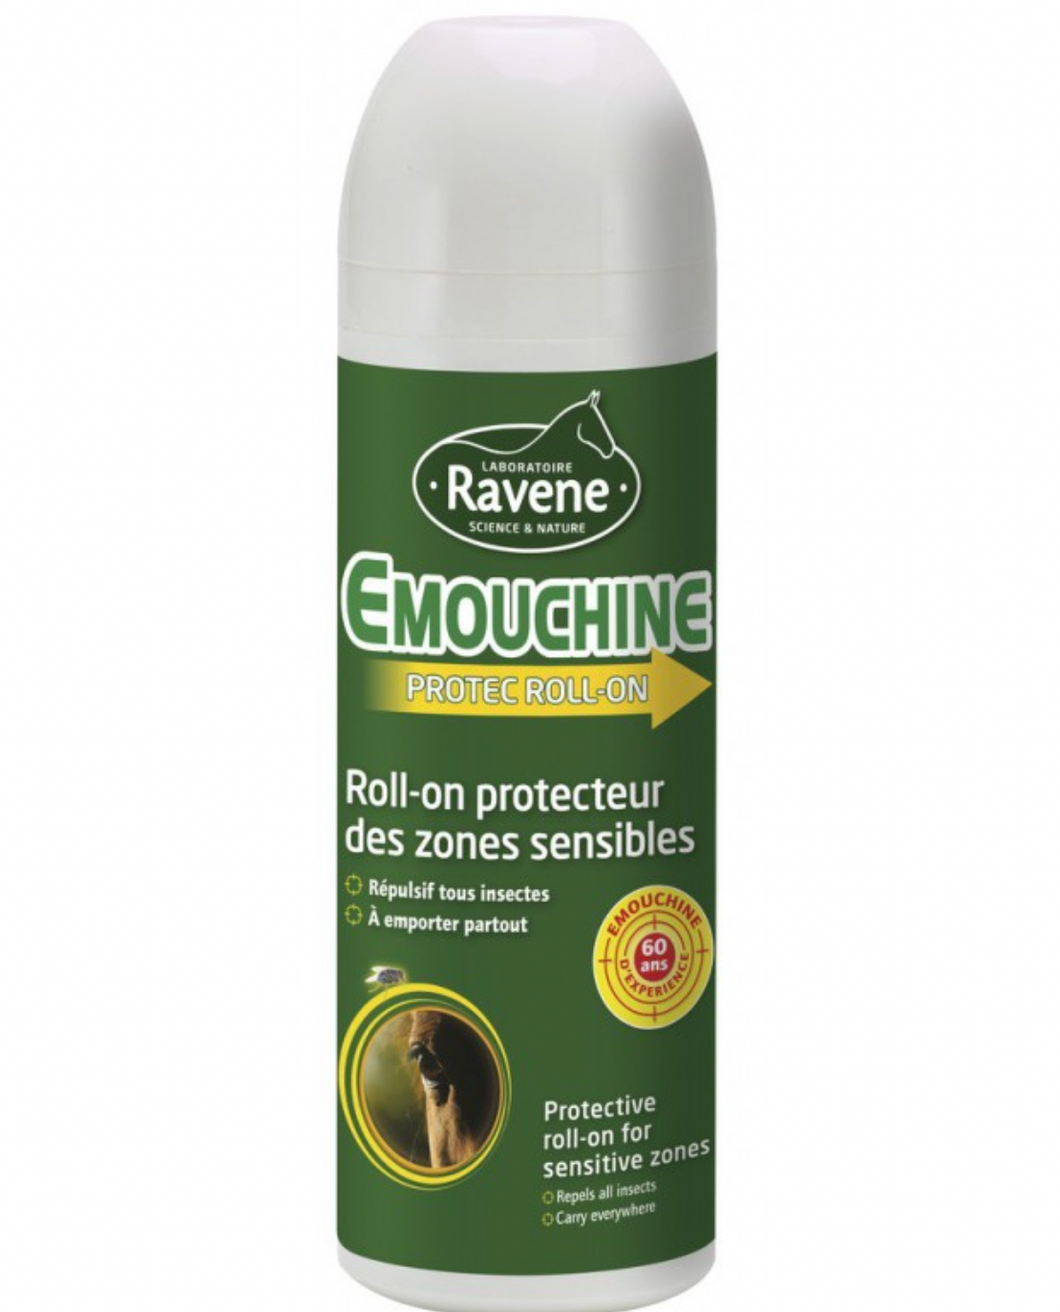 RAVENE - Émouchine Protec Roll-on